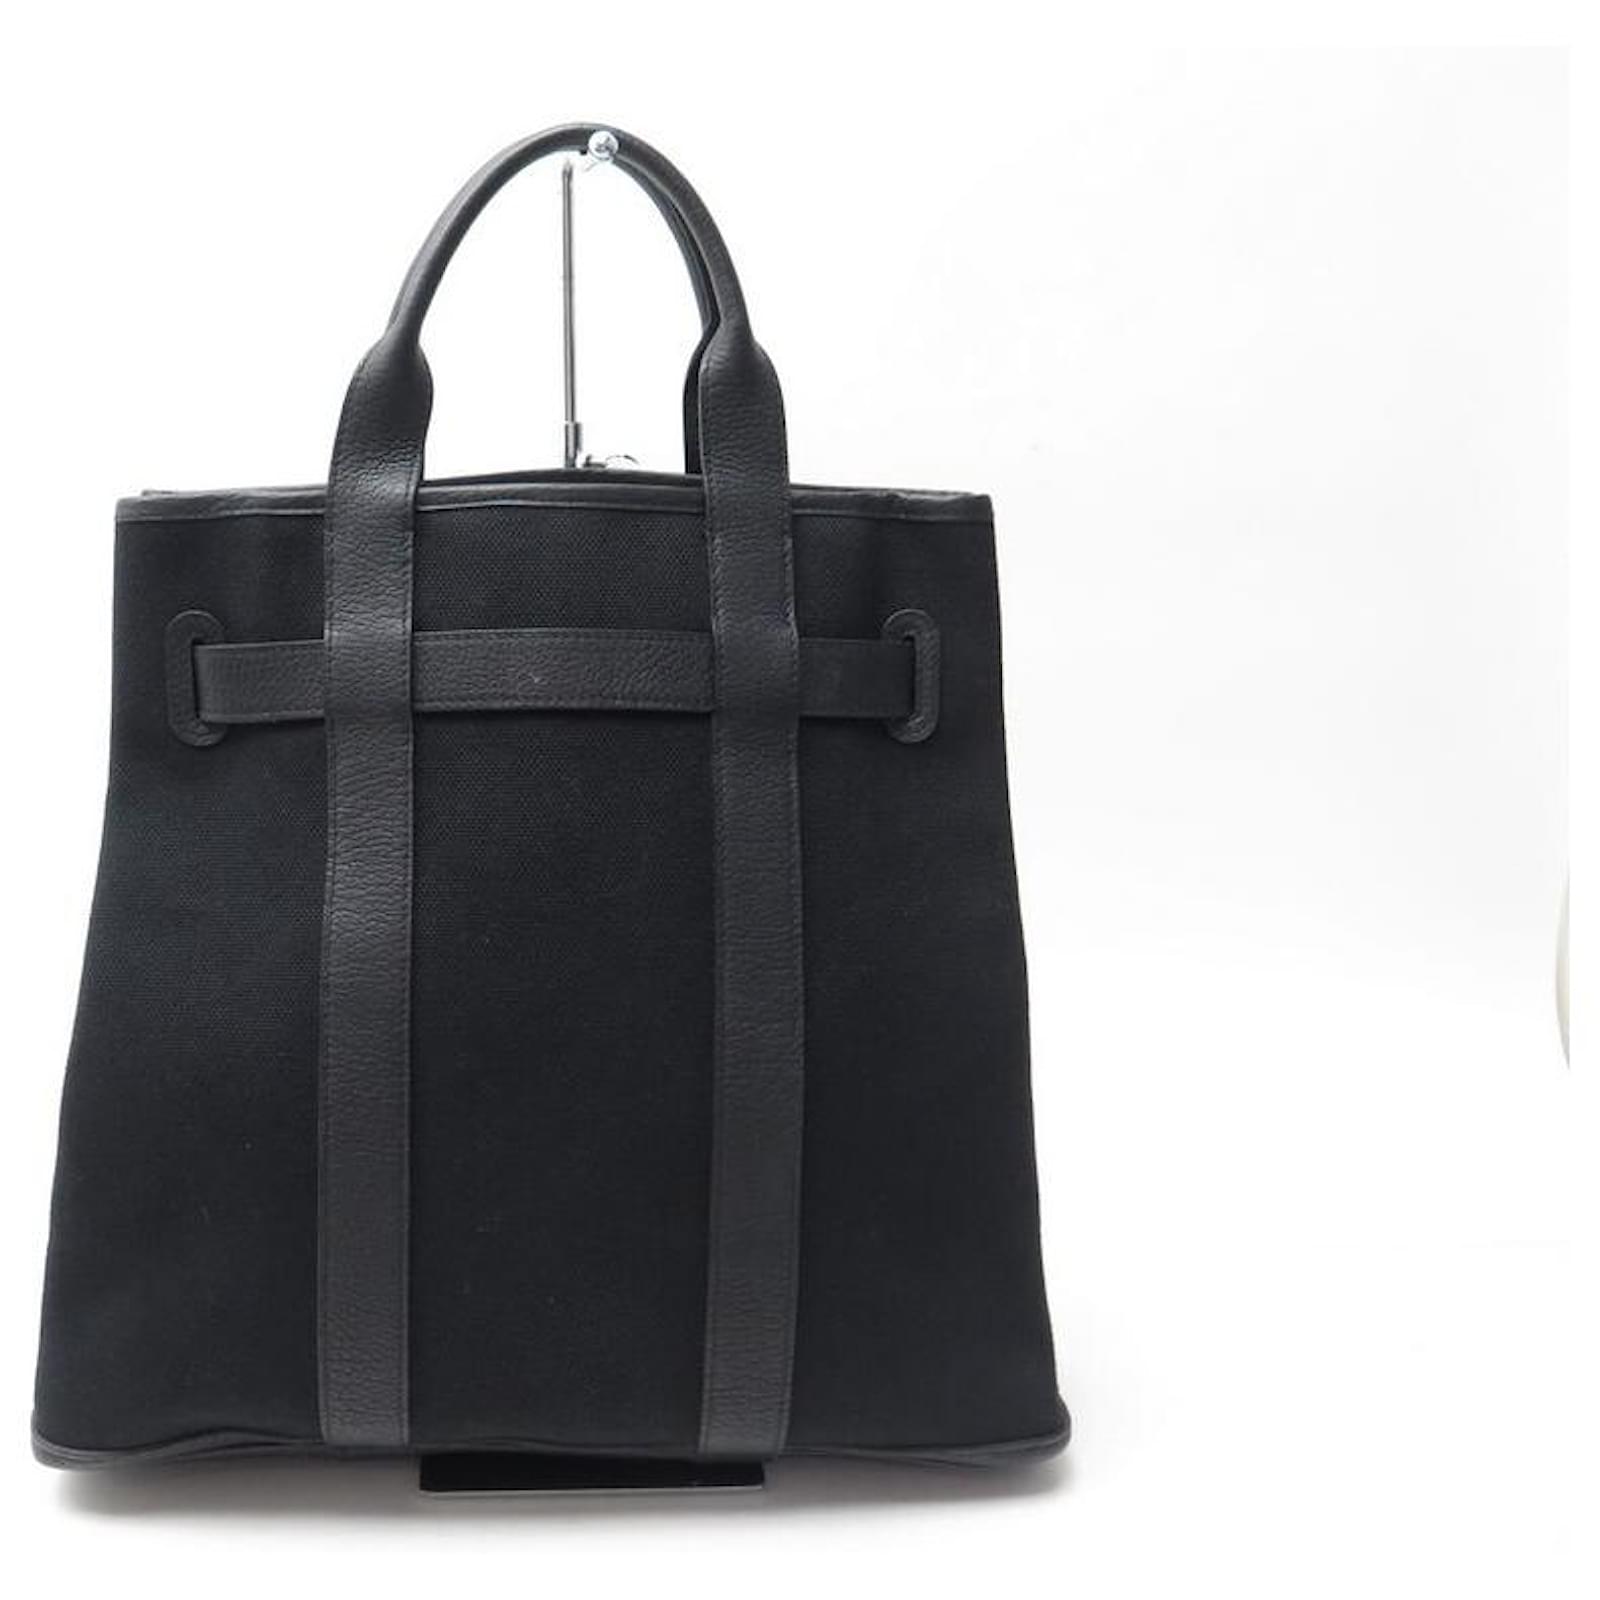 Handbags Hermès New Hermes Small Belt Handbag 32 Canvas & Togo Leather Black Tote Bag